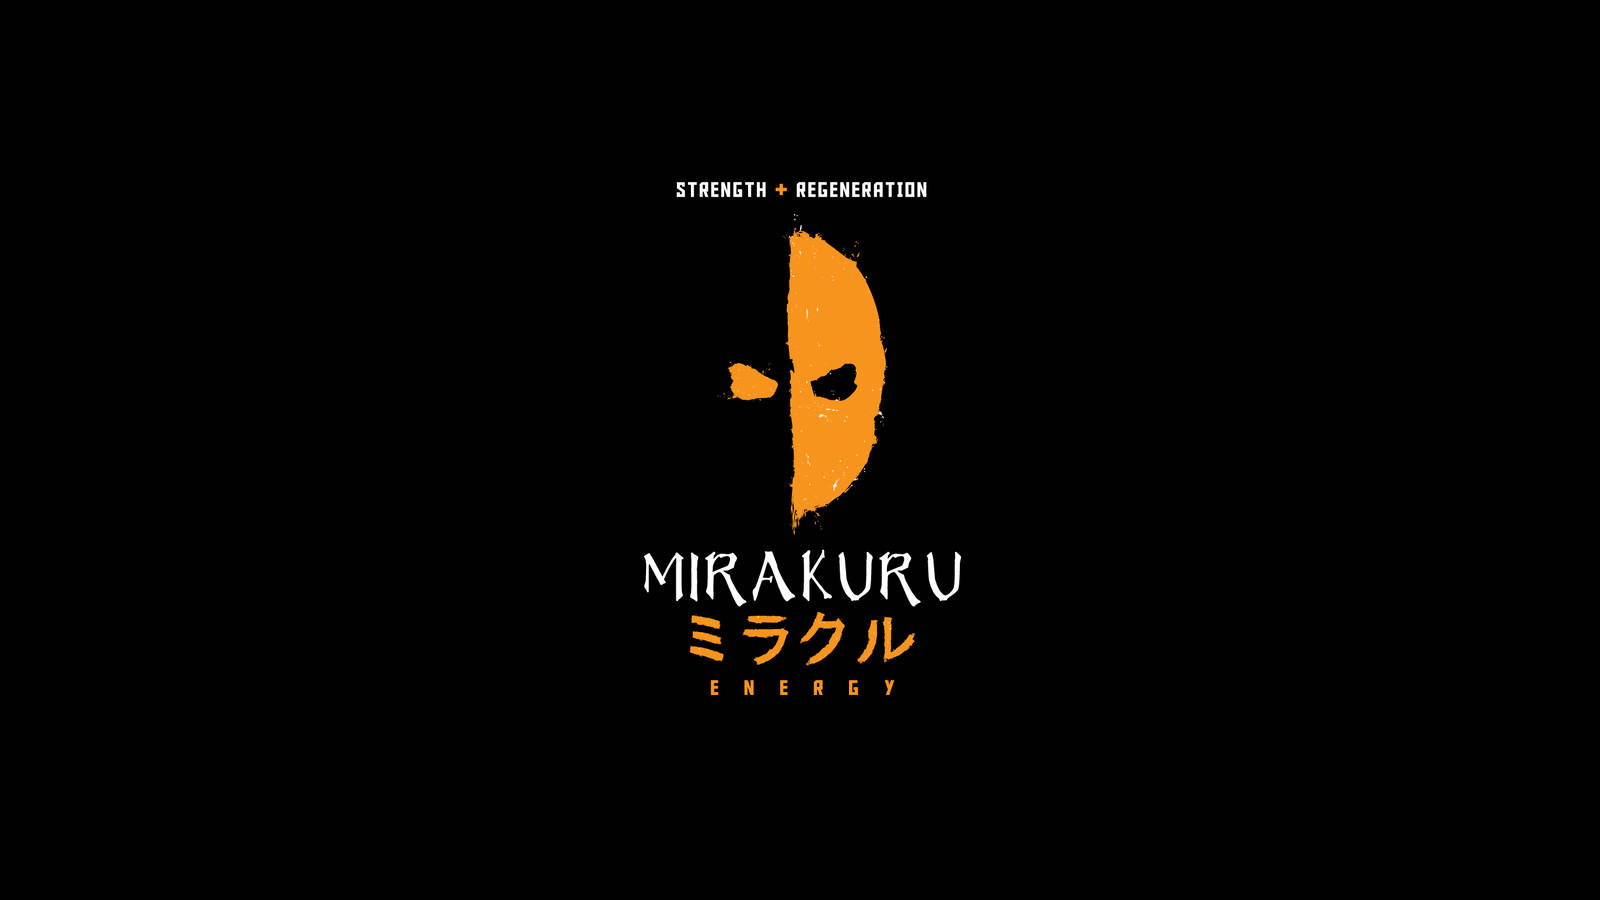 Deathstroke Mirakuru, Hd Tv Shows, 4k Wallpaper, Image